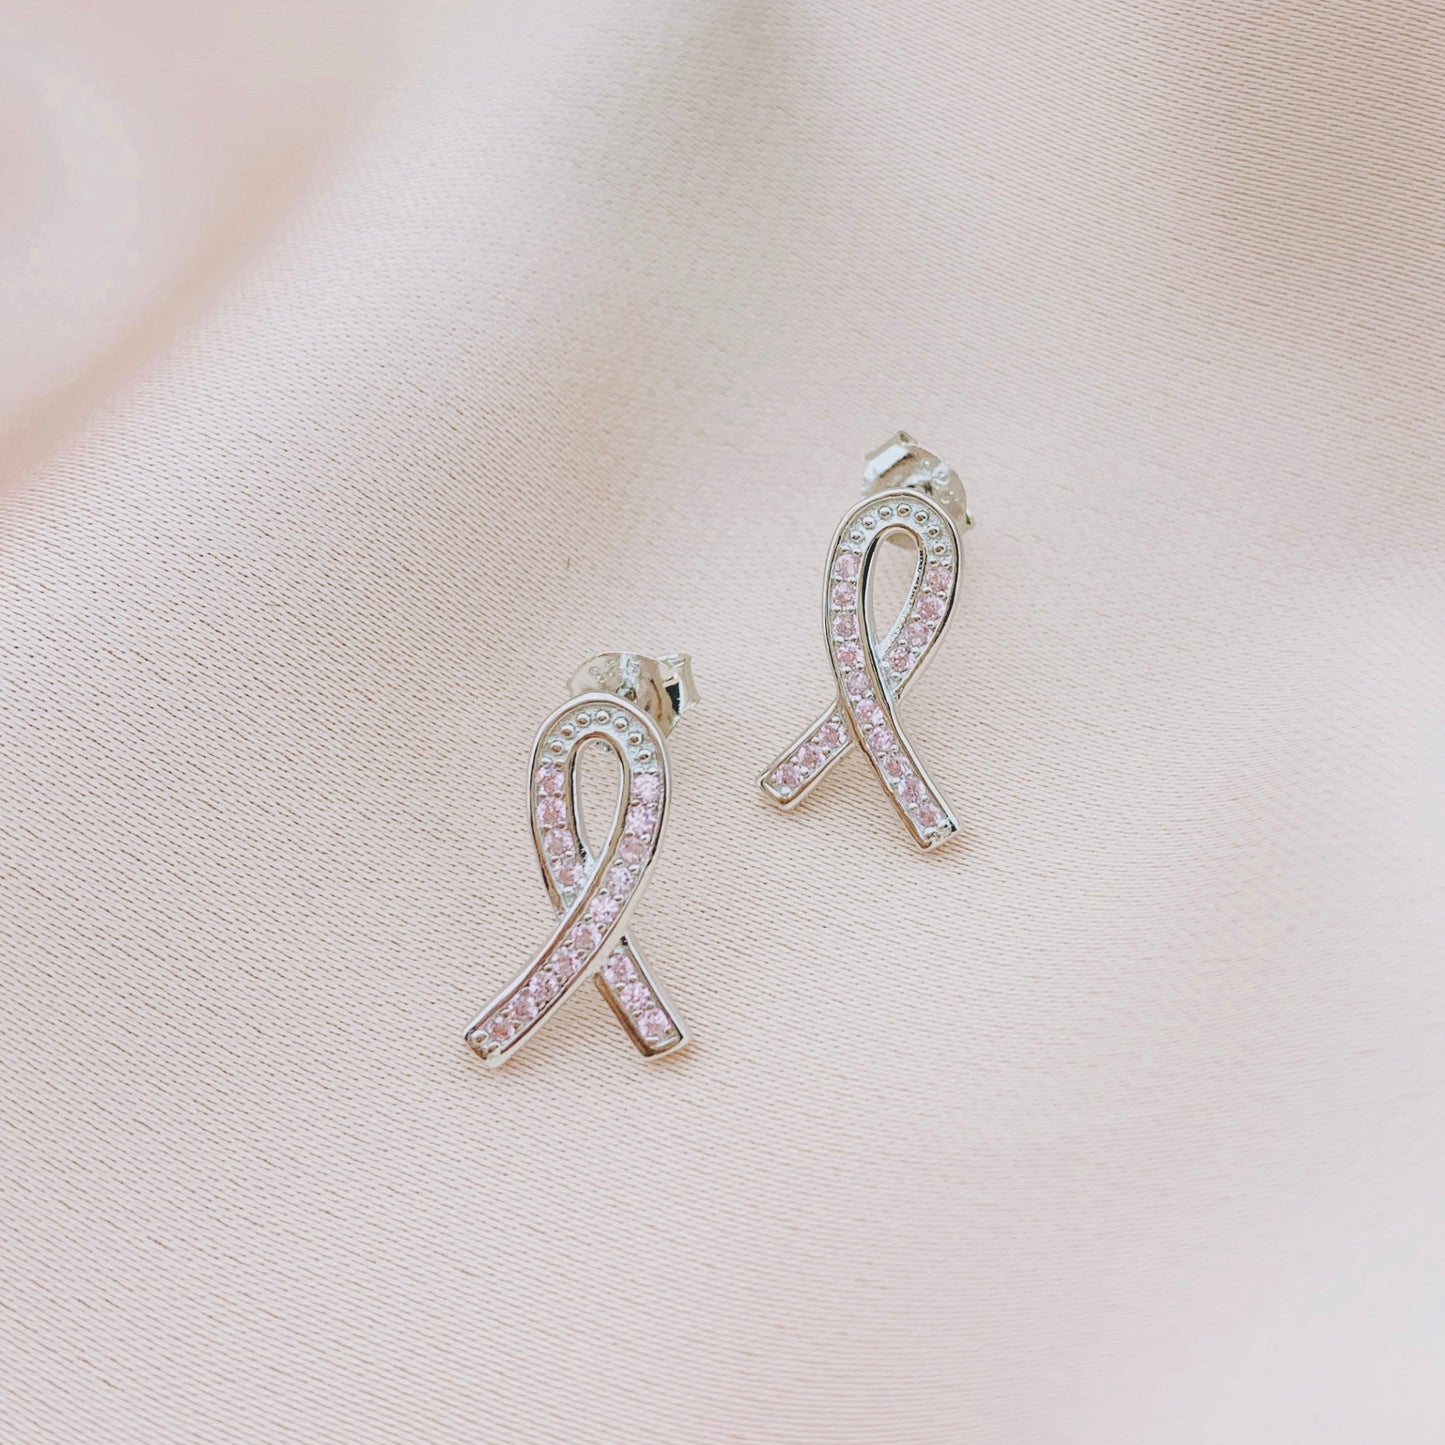 Women's Fashion Breast Cancer CZ Jewelry Sets